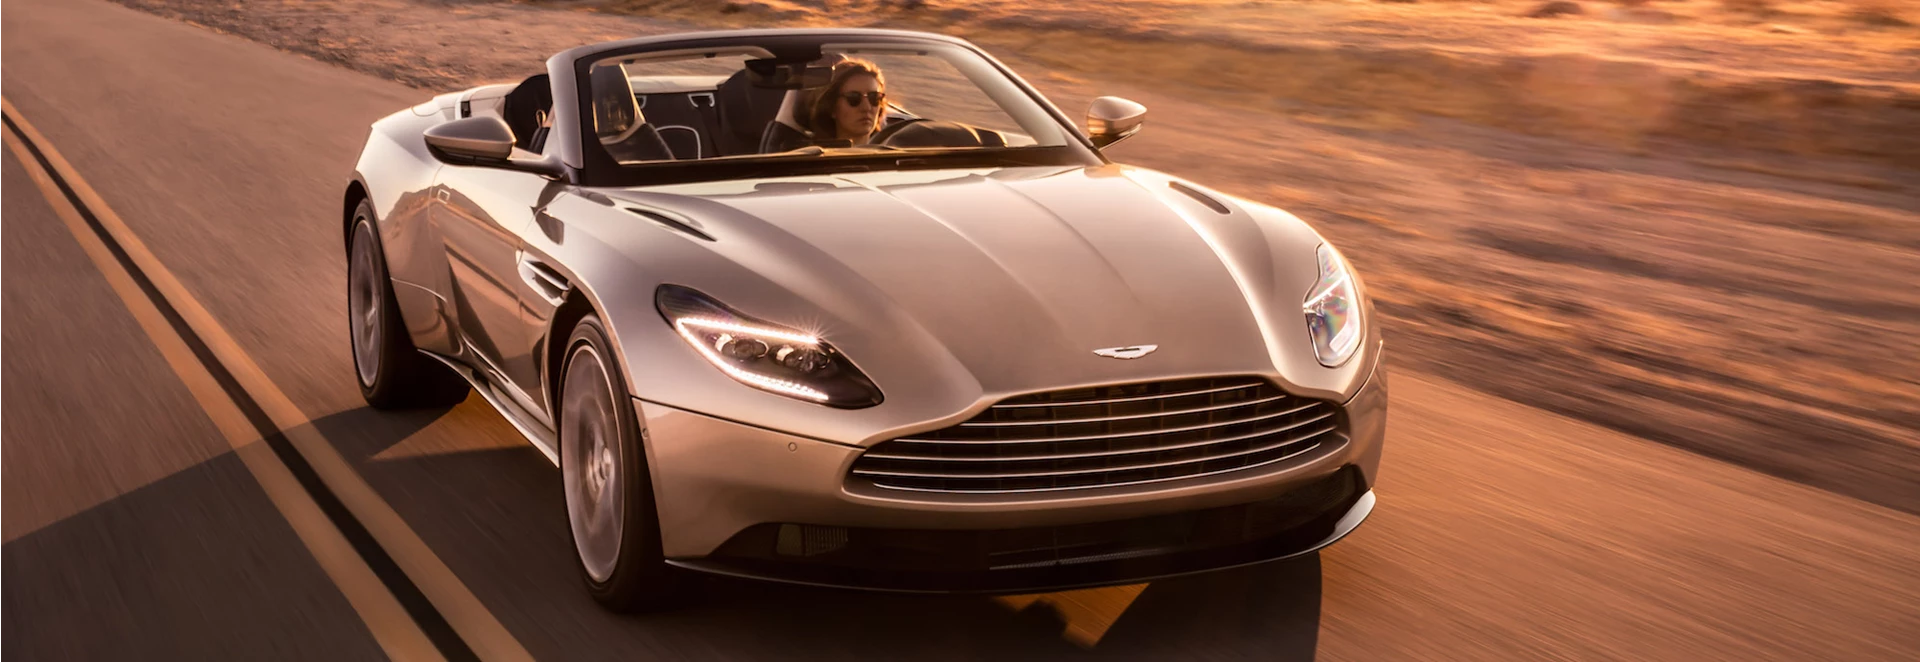 Aston Martin reveals DB11 Volante 